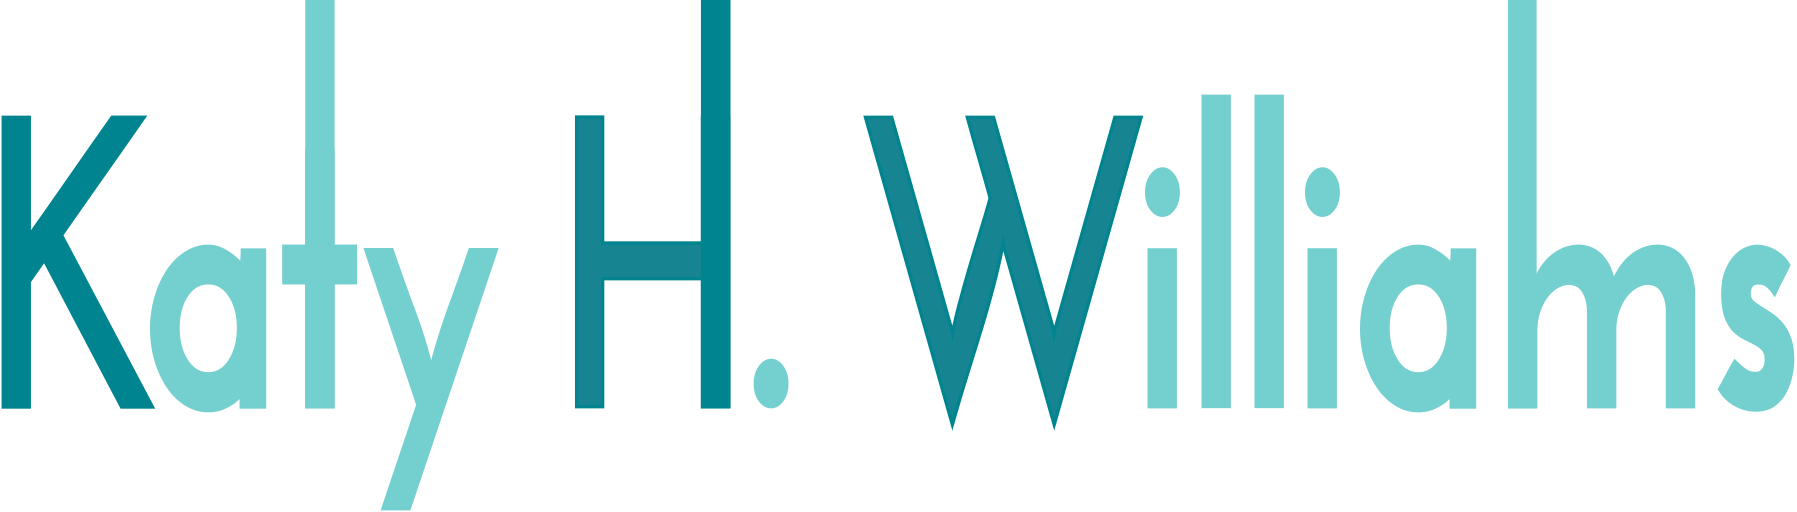 Katy H. Williams  Logo